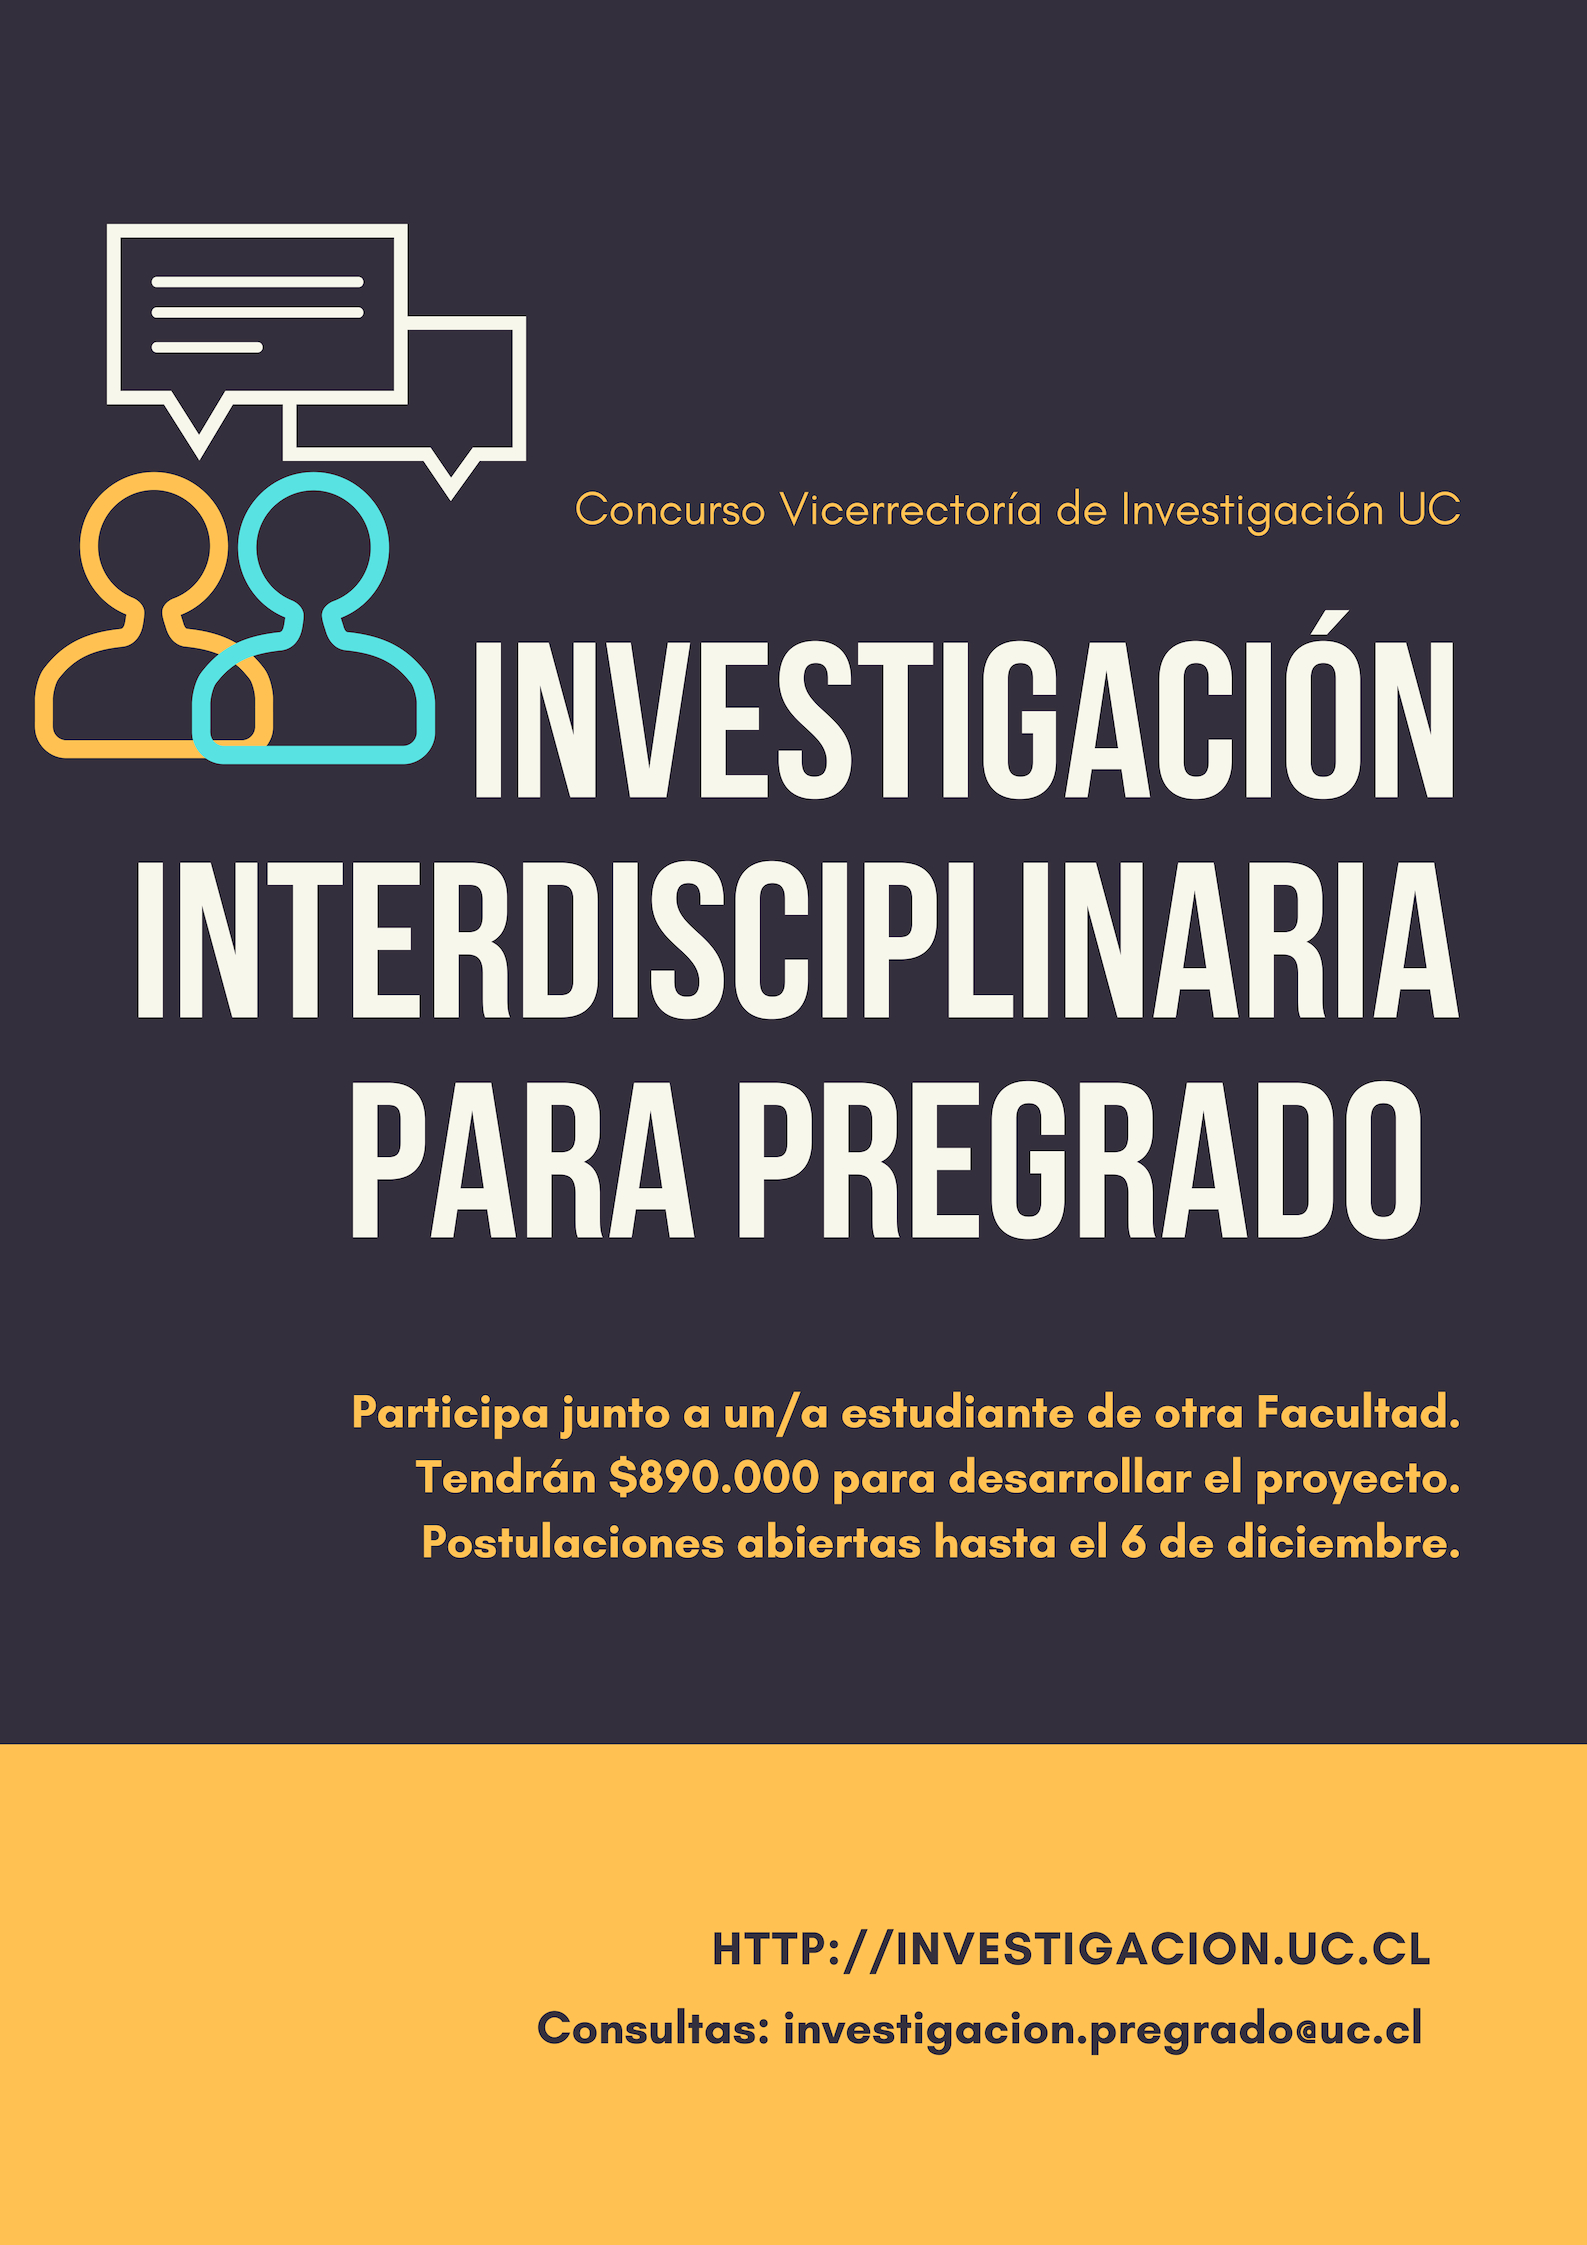 Inv.Interdisciplinaria_Pregrado_1.jpg